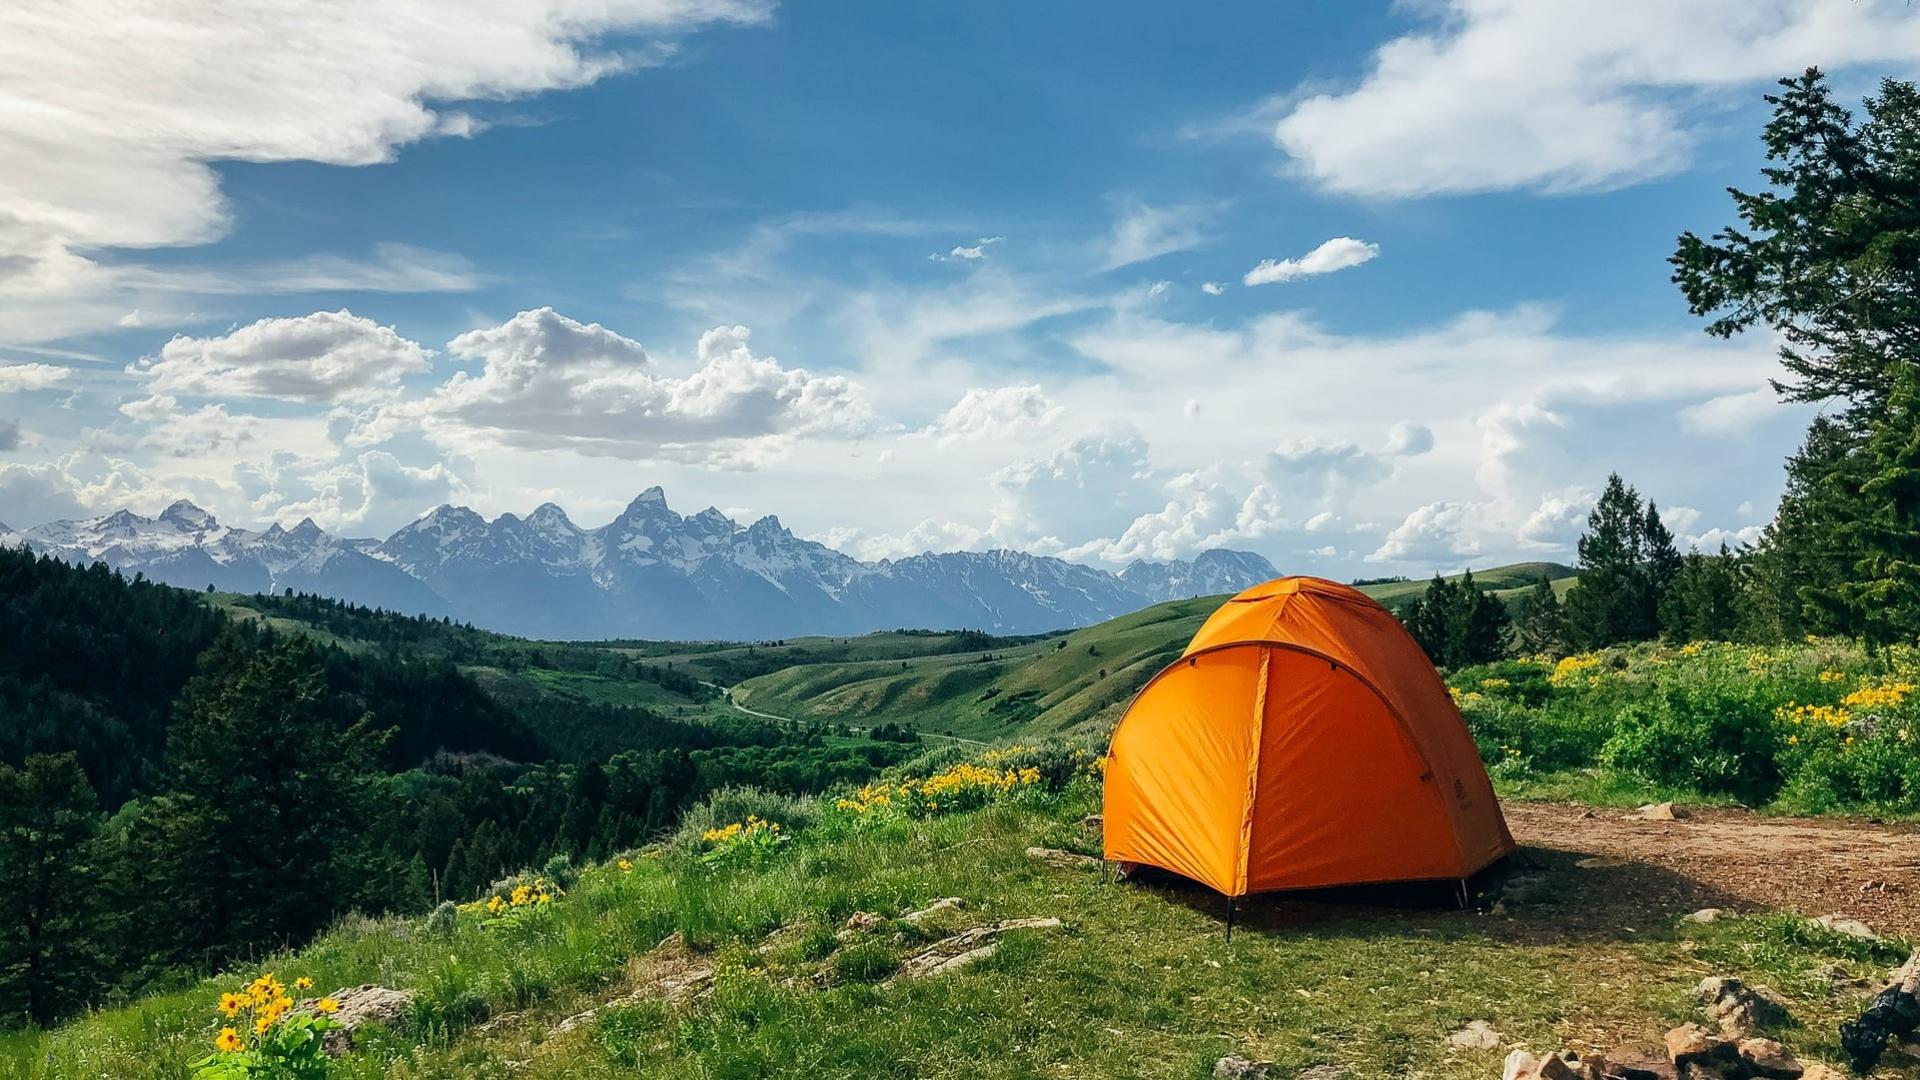 Yellow tent among beautiful mountains and grass